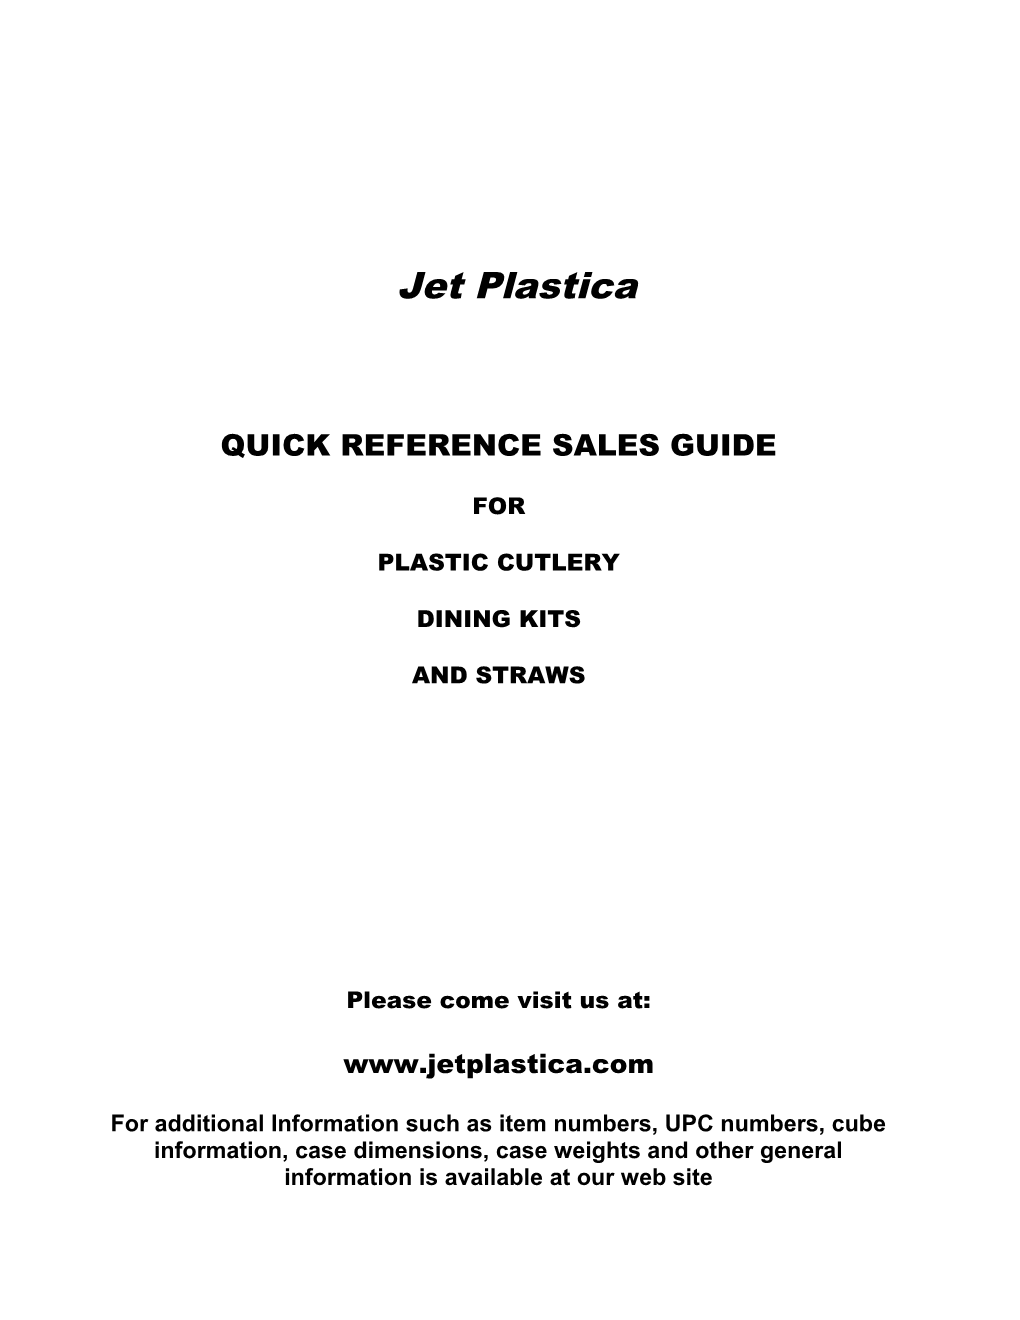 Jet Plastica Industries, Inc